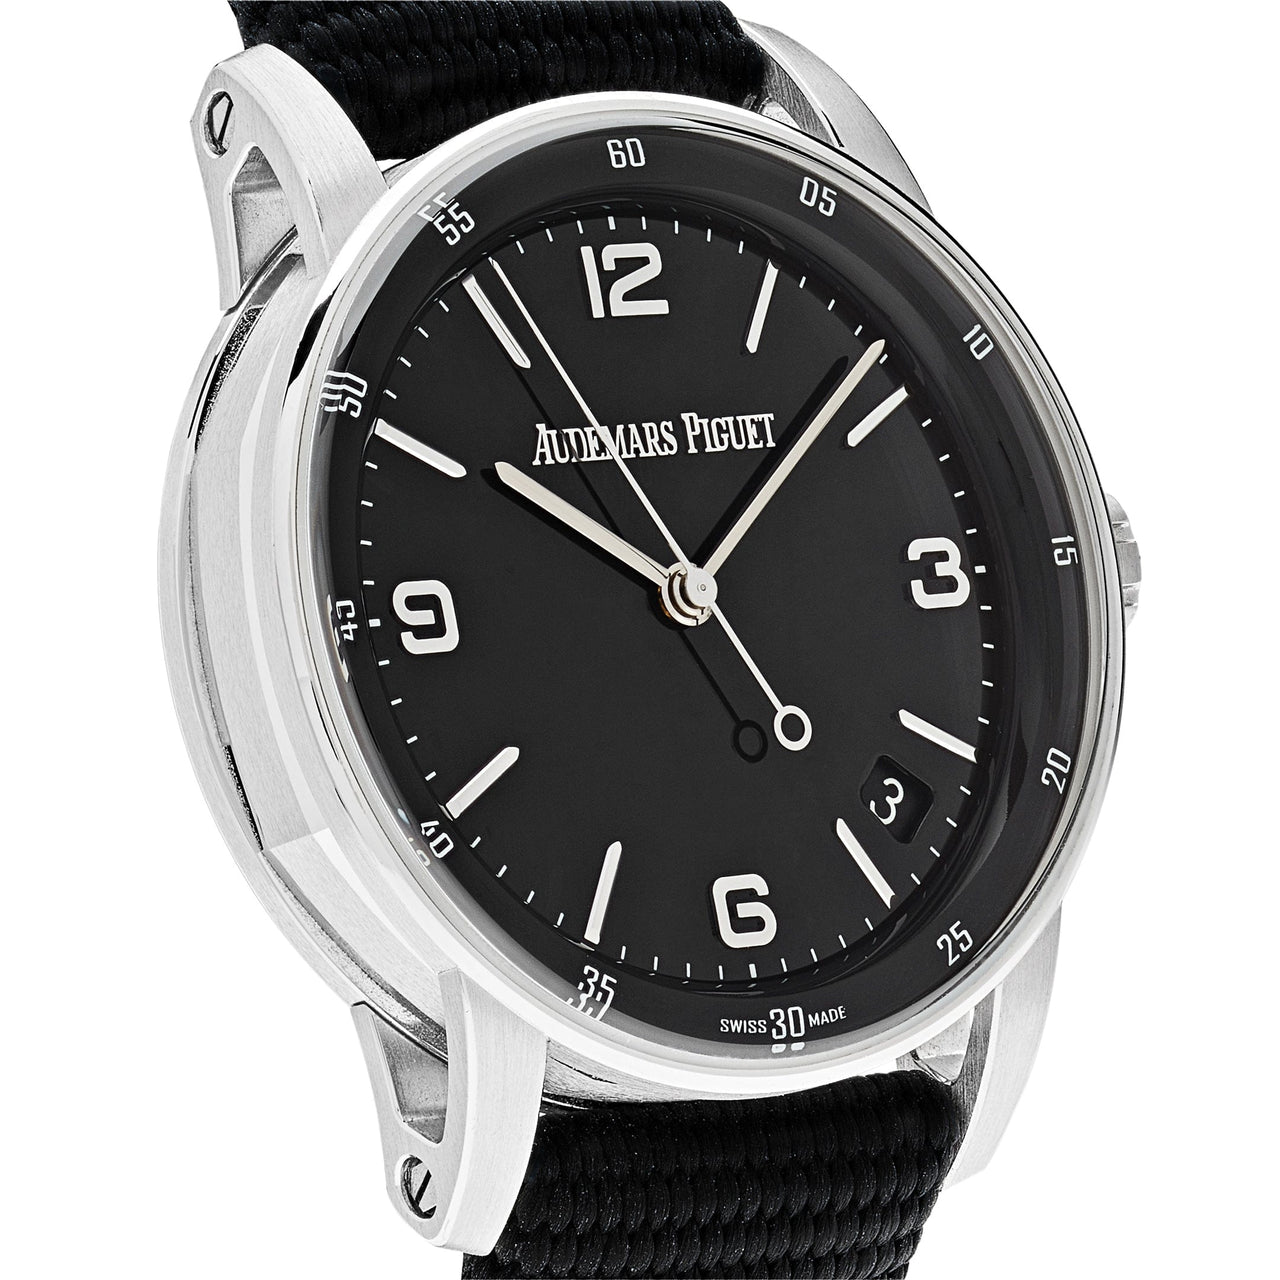 Luxury Watch Audmemars Piguet Code 11.59 White Gold Black Dial 15210BC.OO.A002CR.01 Wrist Aficionado